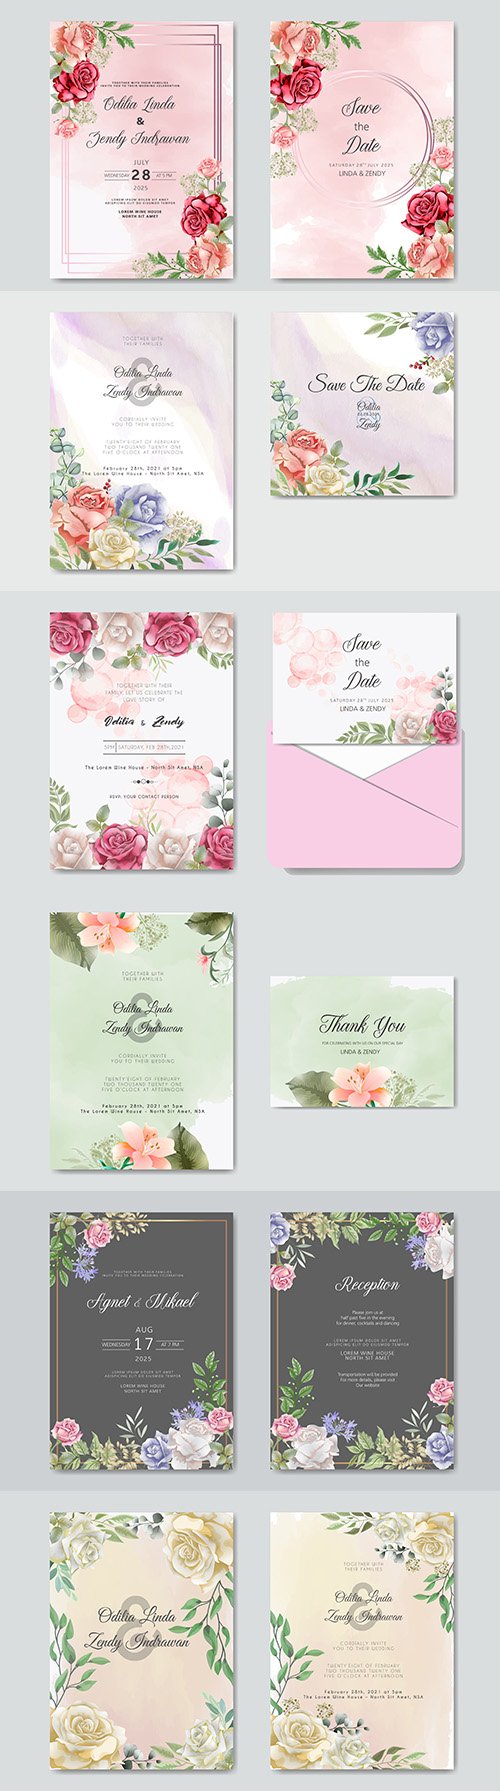 Wedding floral watercolor decorative invitations 14